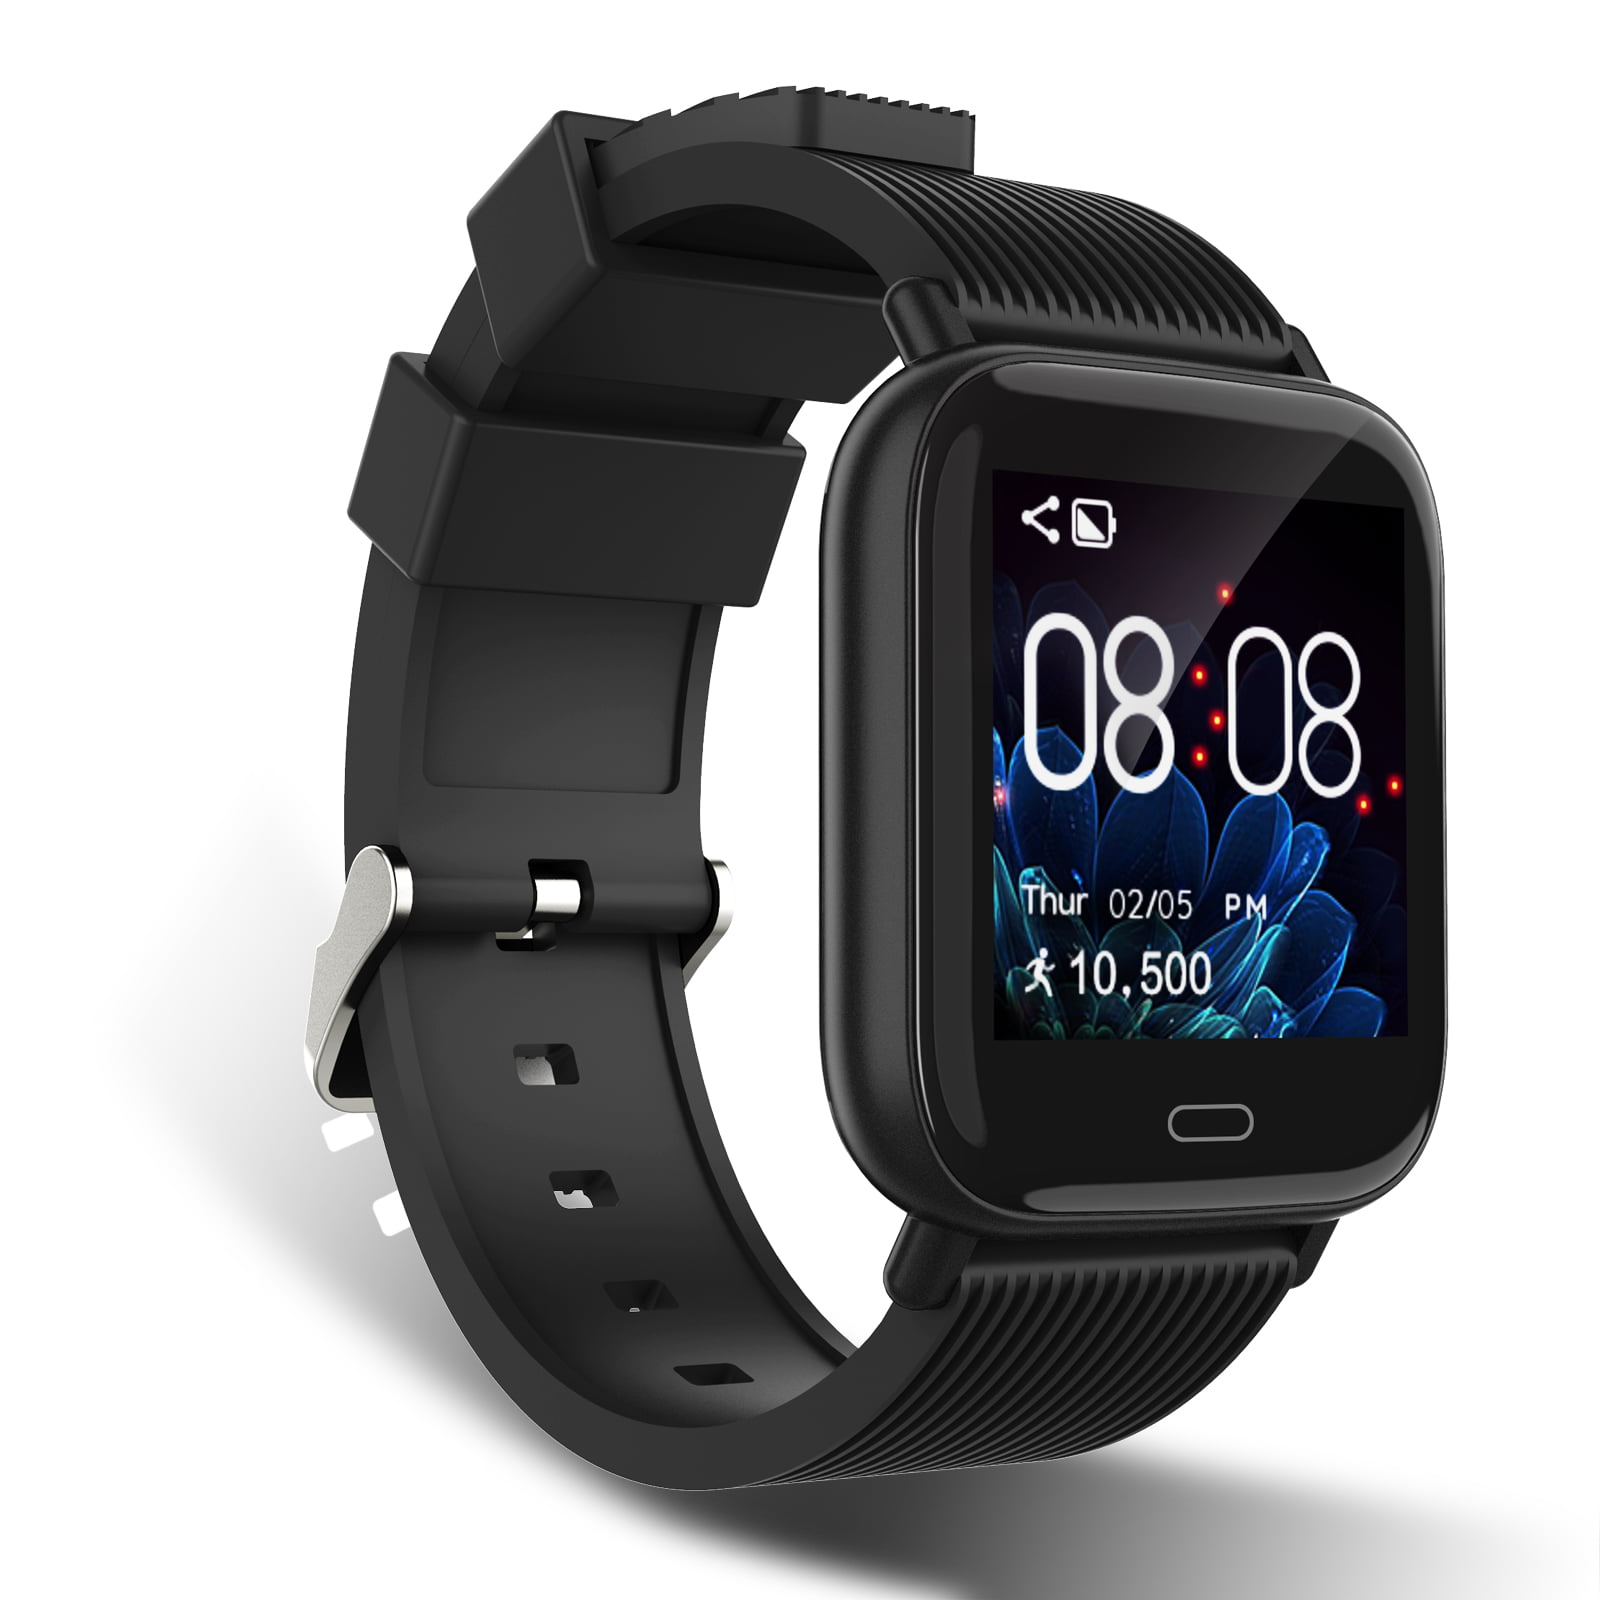 EEEkit Smart Watch Compatible with iPhone Android Phones, IP67 Waterproof Smart Activity Fitness Tracker Heart Rate Monitor Step Calorie Counter for Men Women Kids